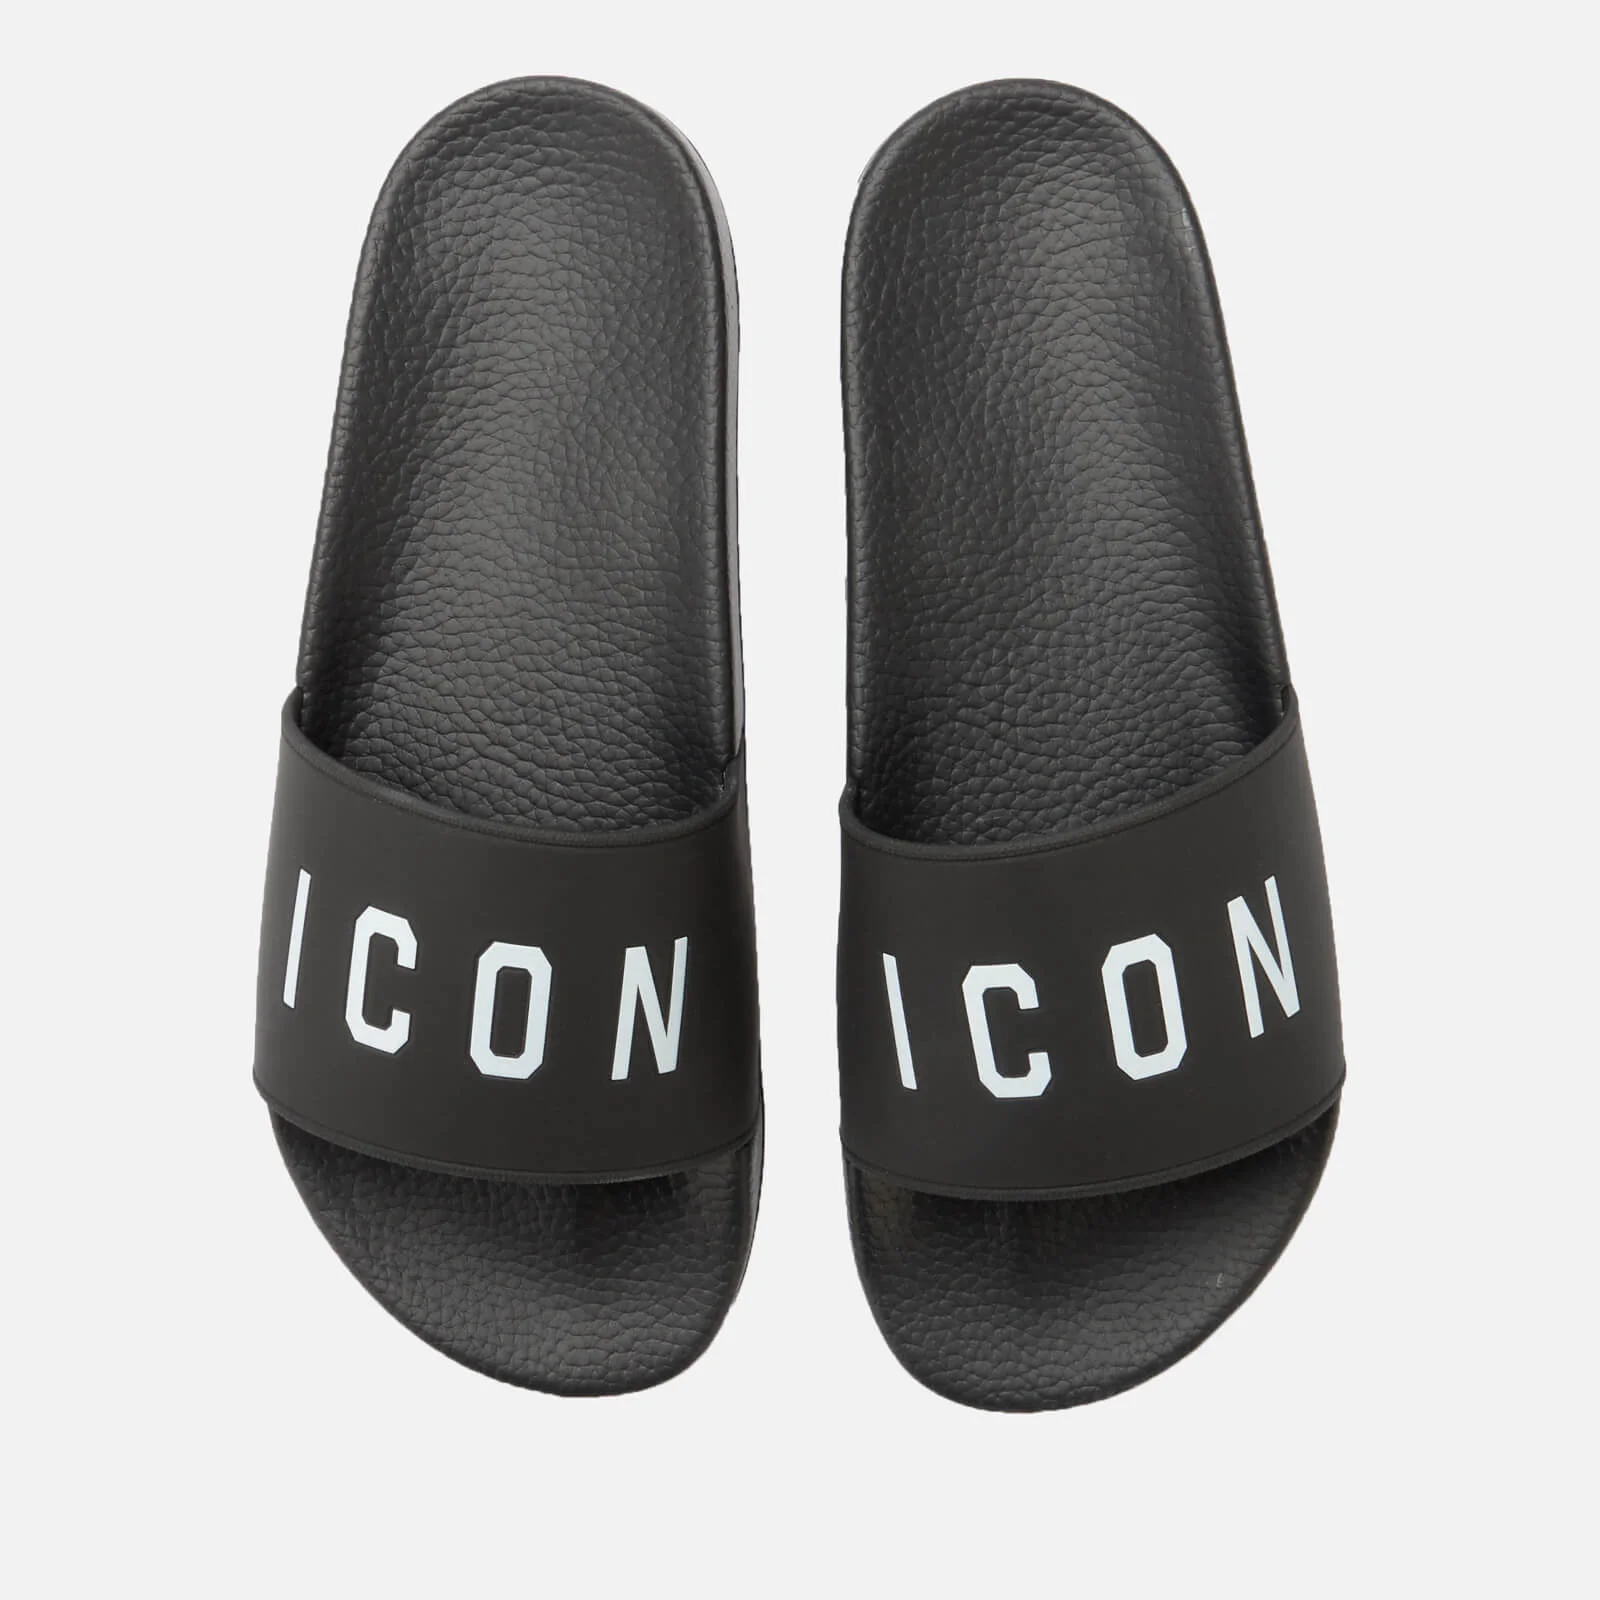 Dsquared2 Men's Icon Slide Sandals - Black Image 1